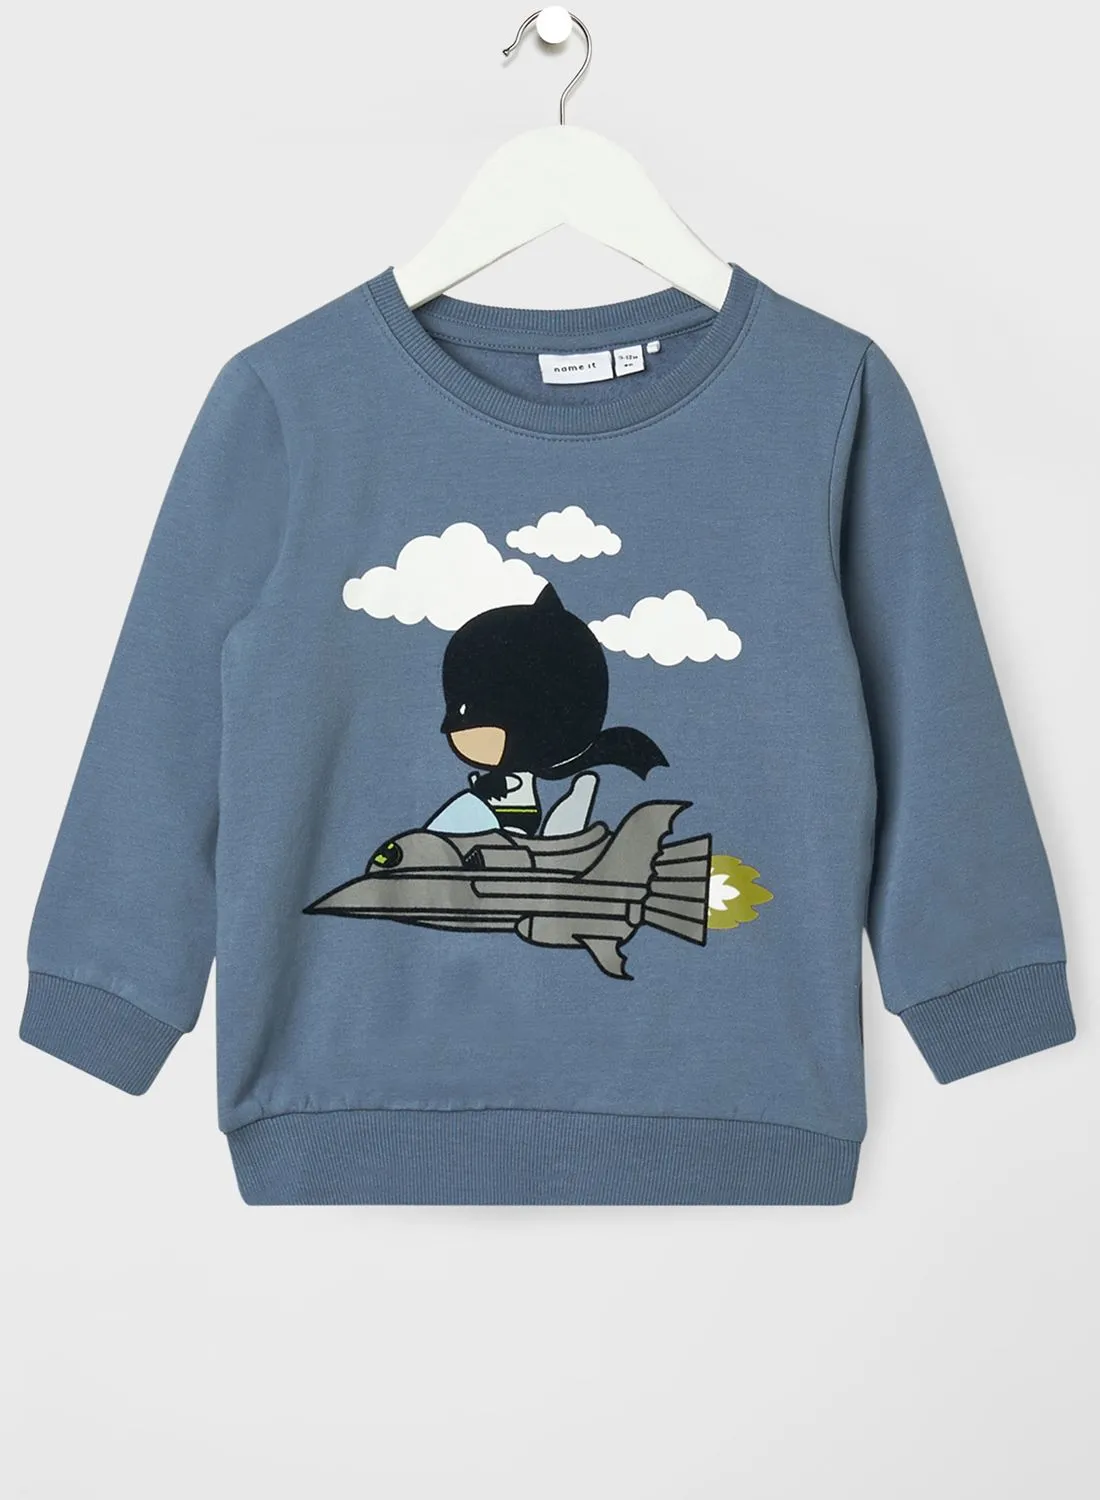 NAME IT Kids Batman Long Sleeve Sweatshirt